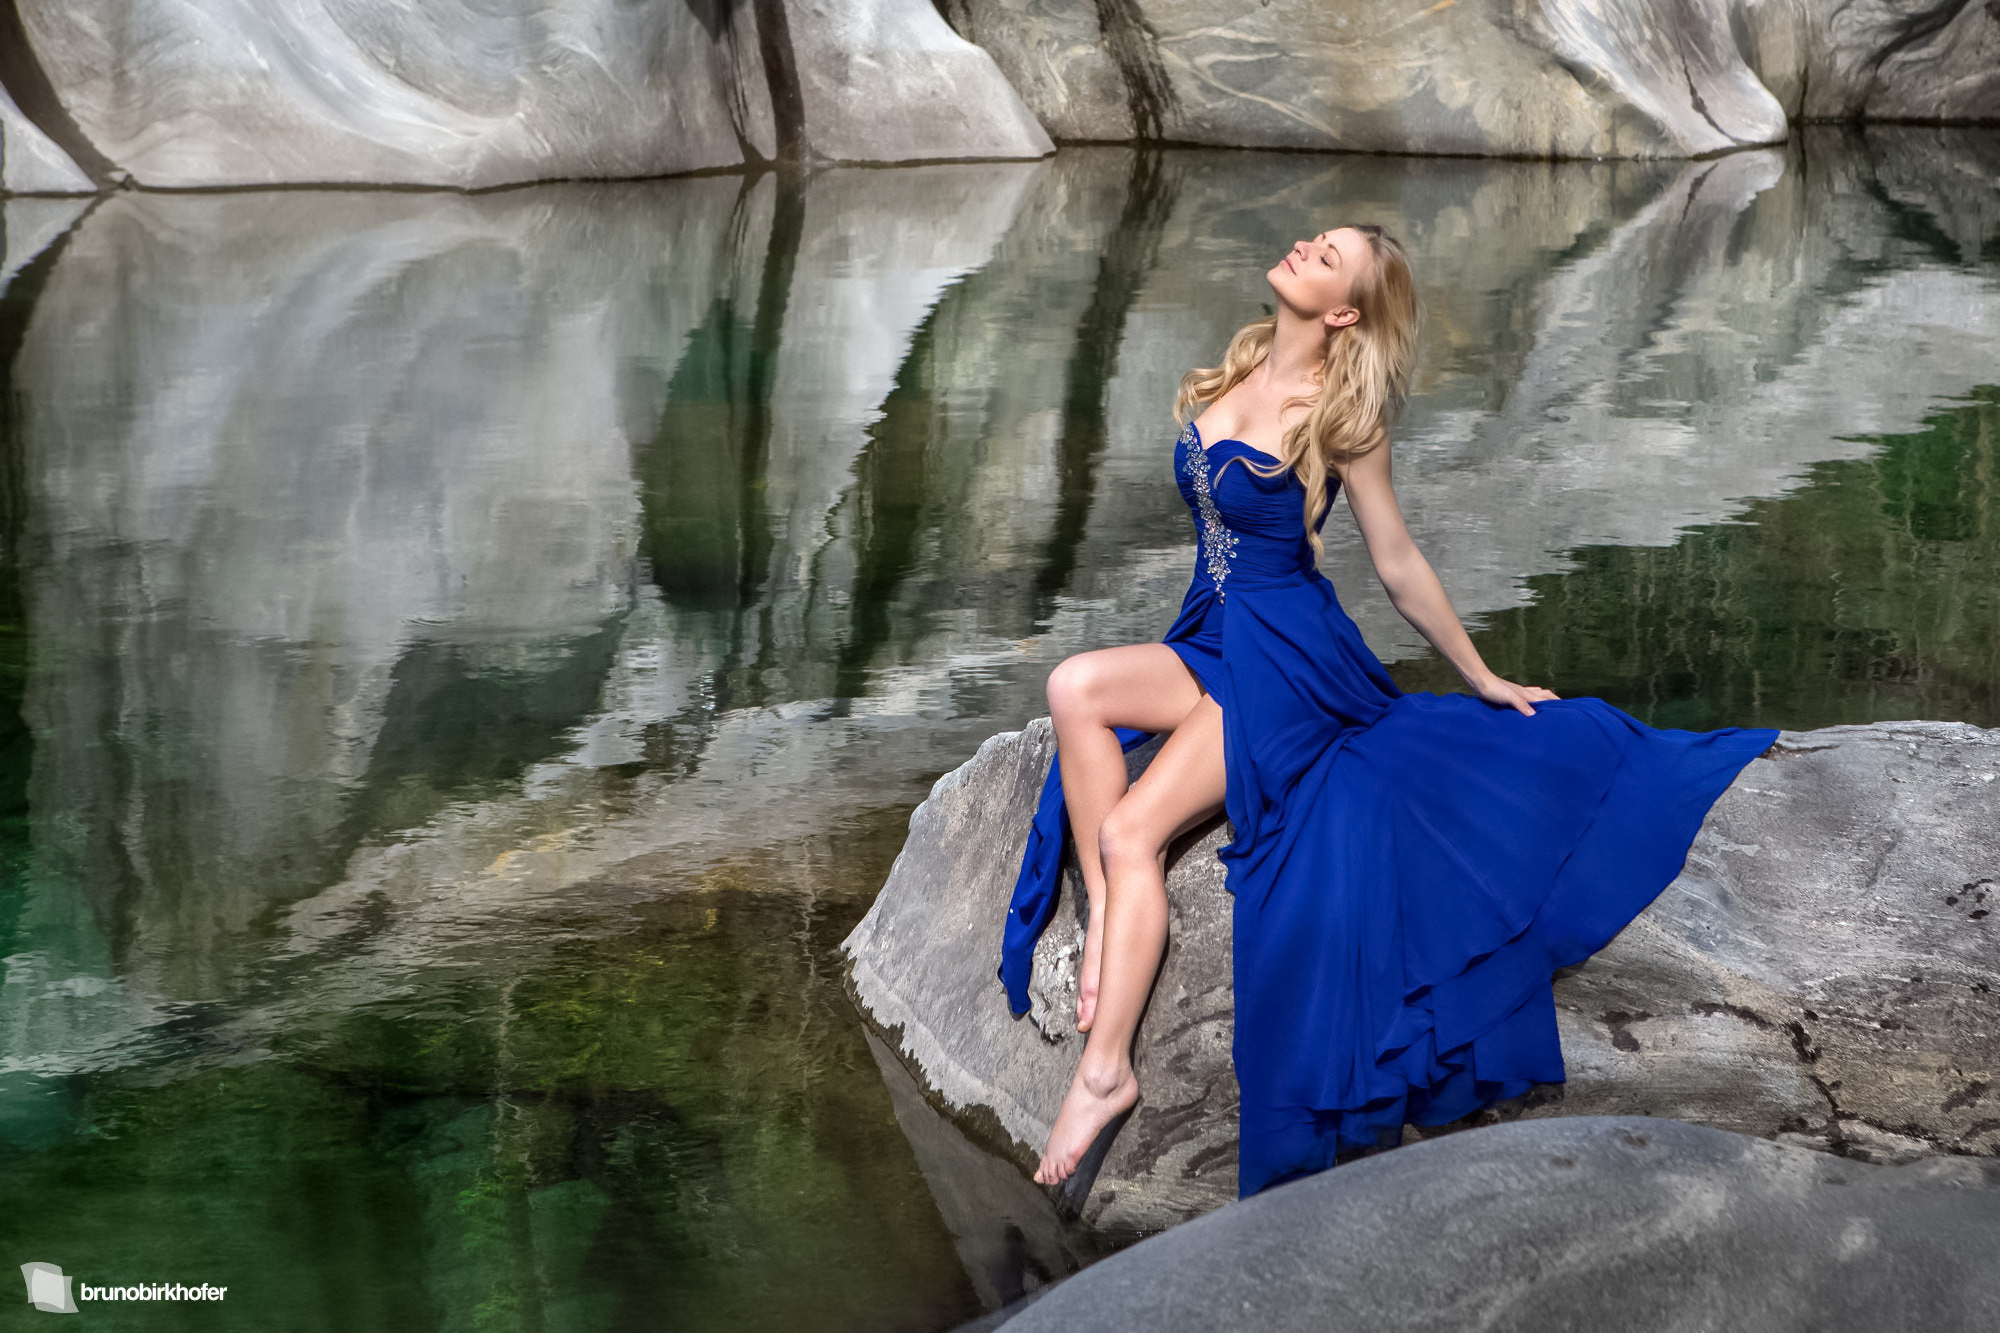 Bruno Birkhofer Women Blonde Long Hair Closed Eyes Dress Blue Clothing Barefoot Water Reflection Blu 2000x1333